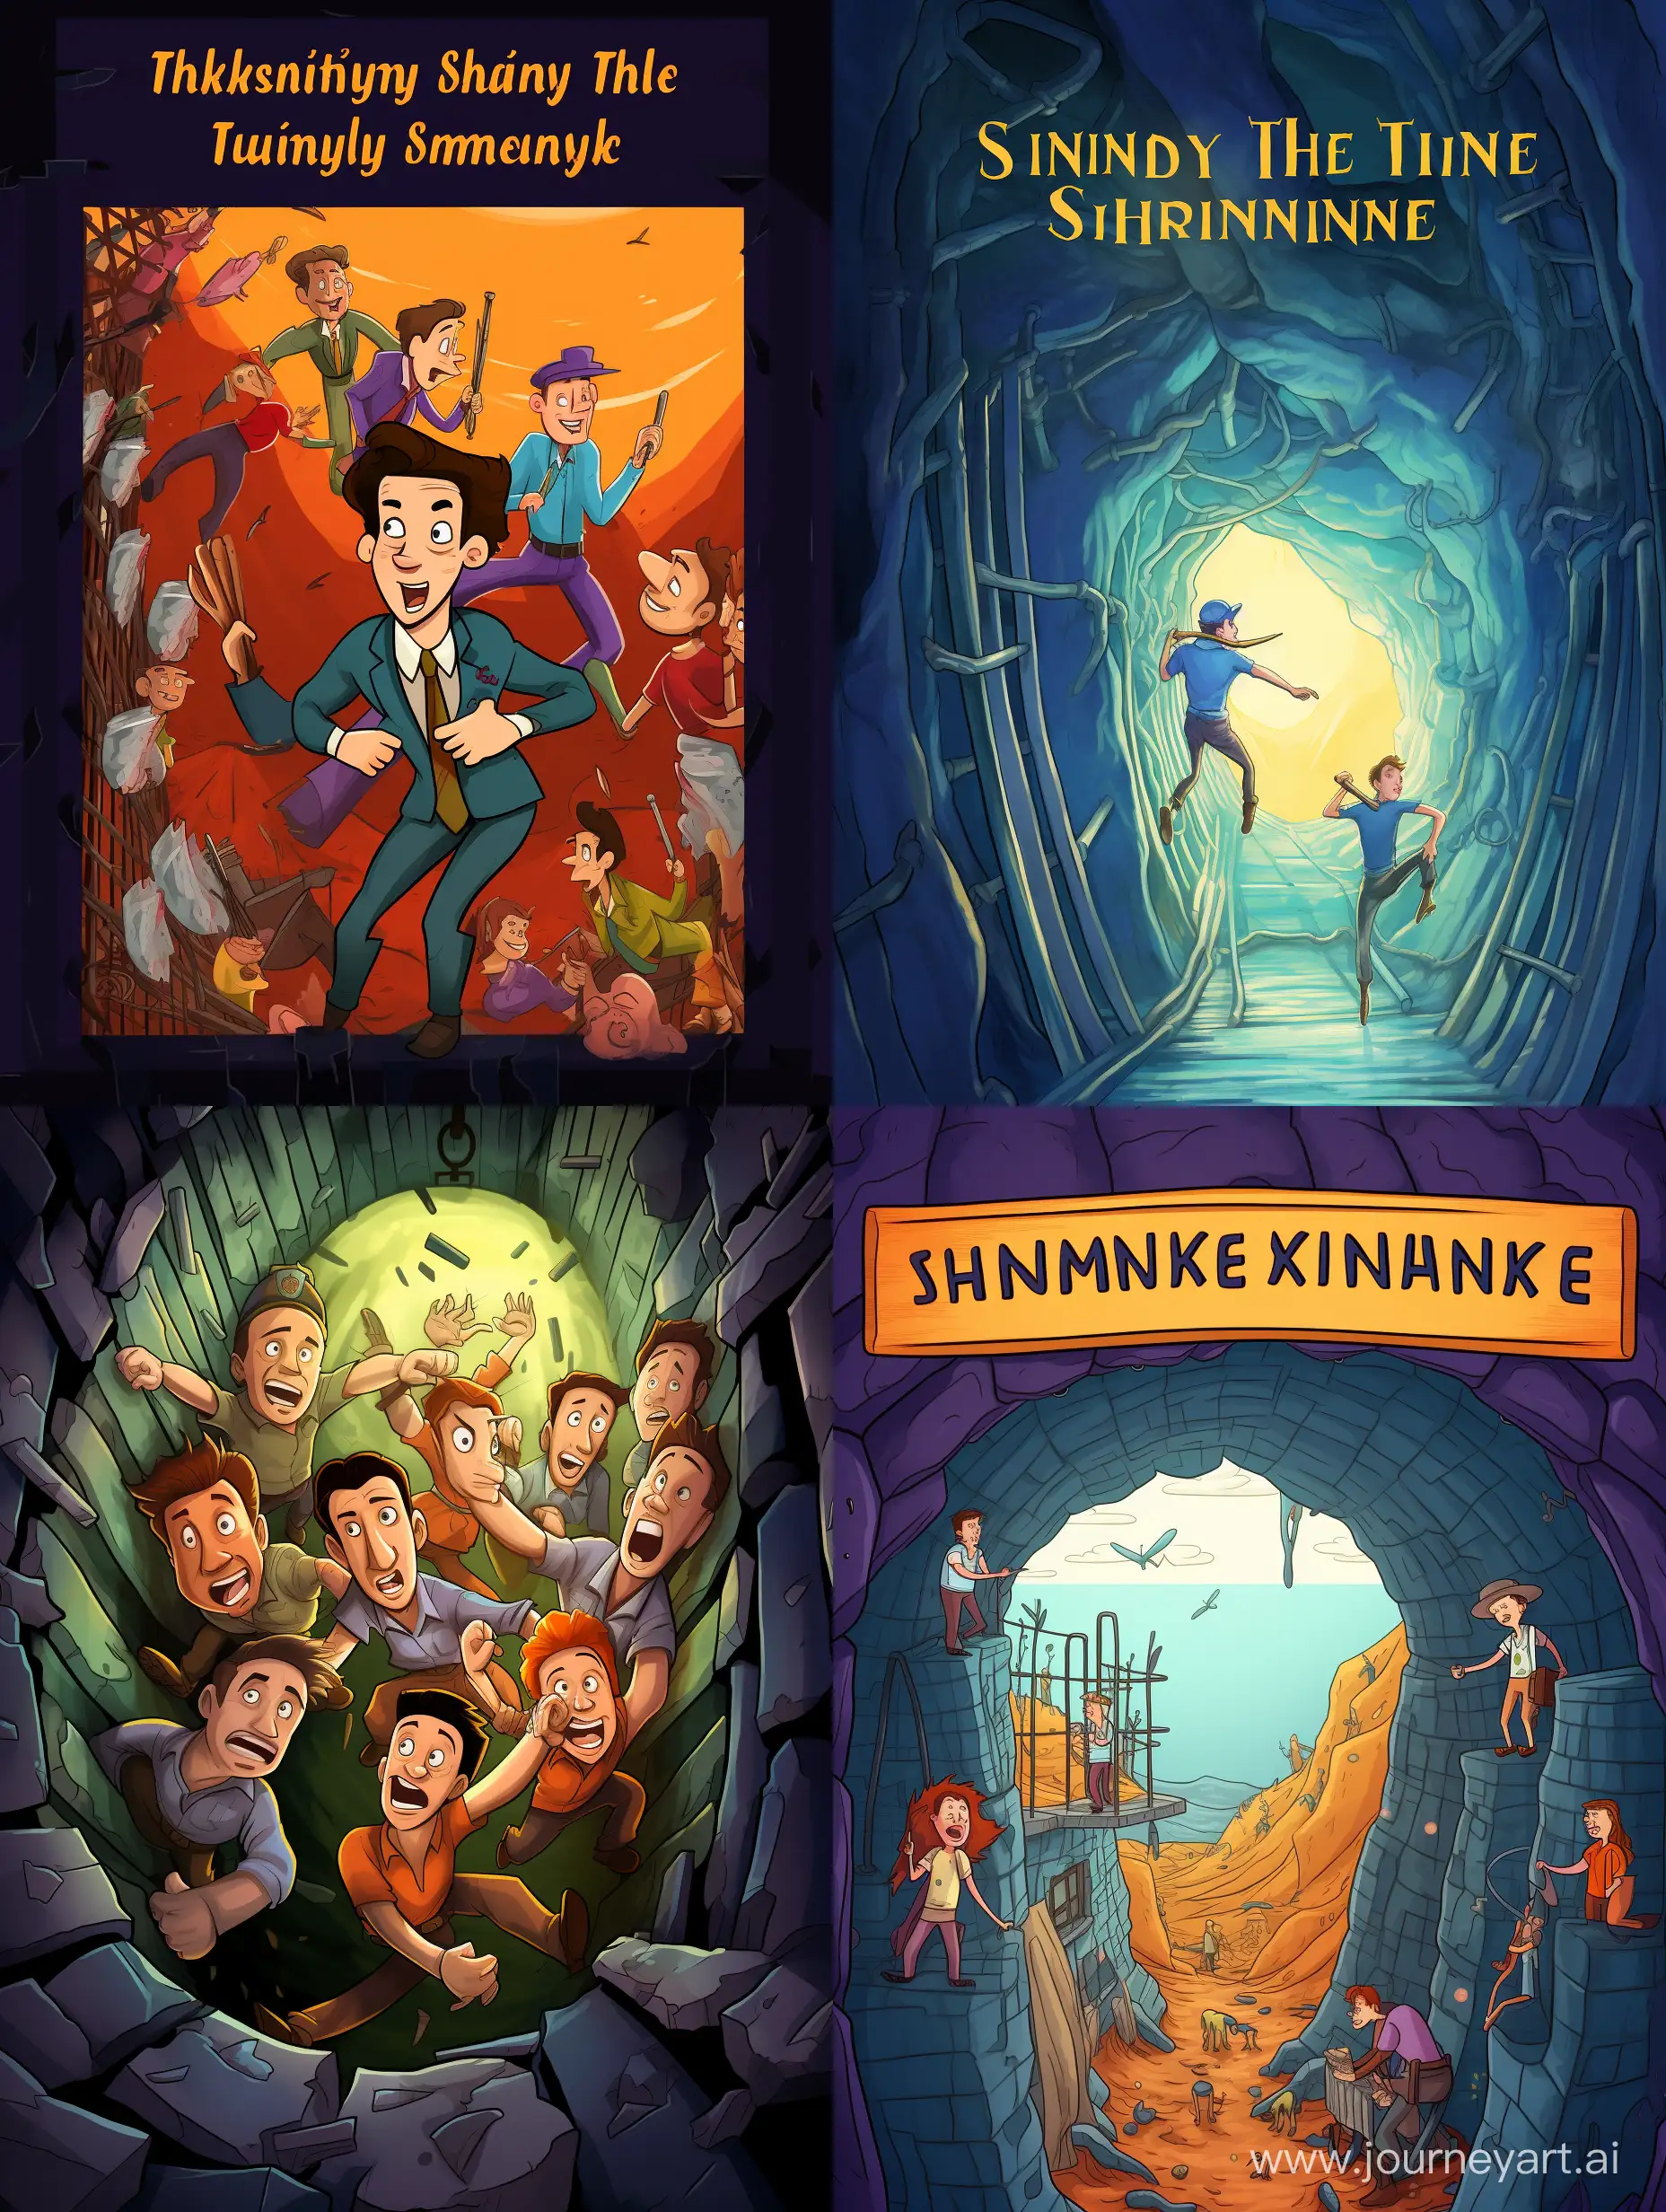 Whimsical-Prison-Escape-Cartoon-Shawshank-Redemption-Characters-Plan-Escape